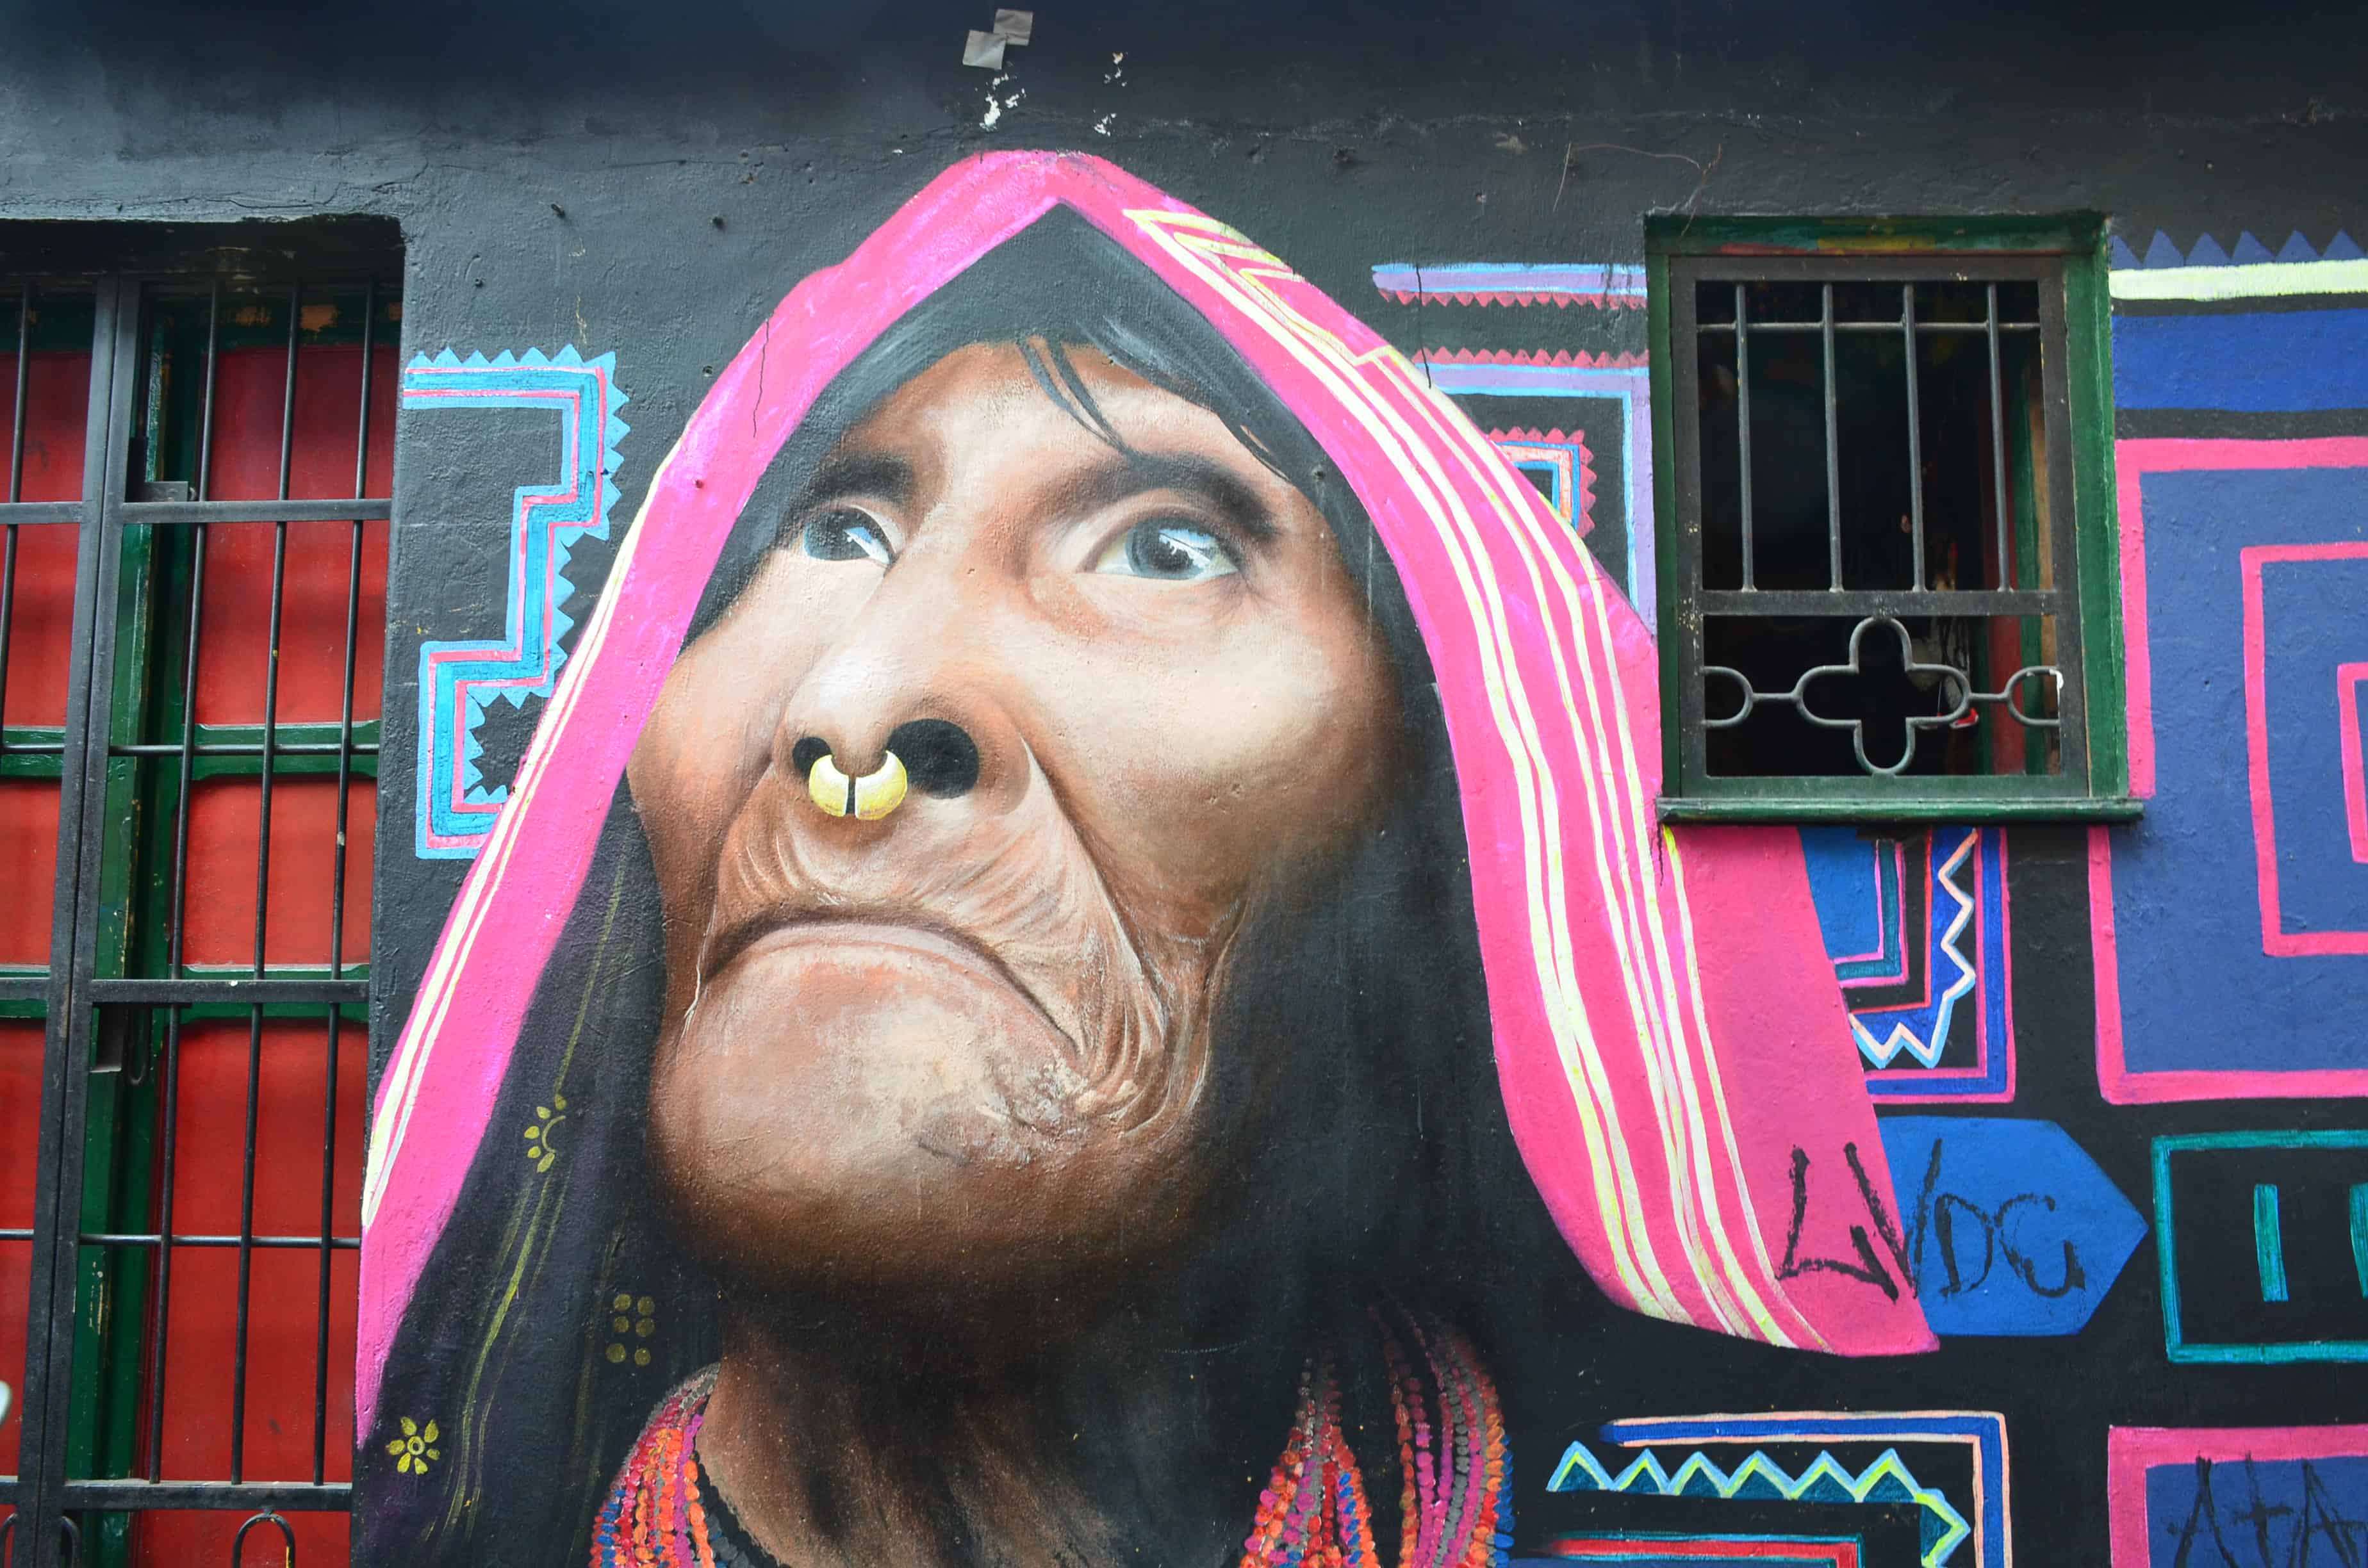 Near Chorro de Quevedo on the Bogotá Graffiti Tour in Bogotá, Colombia